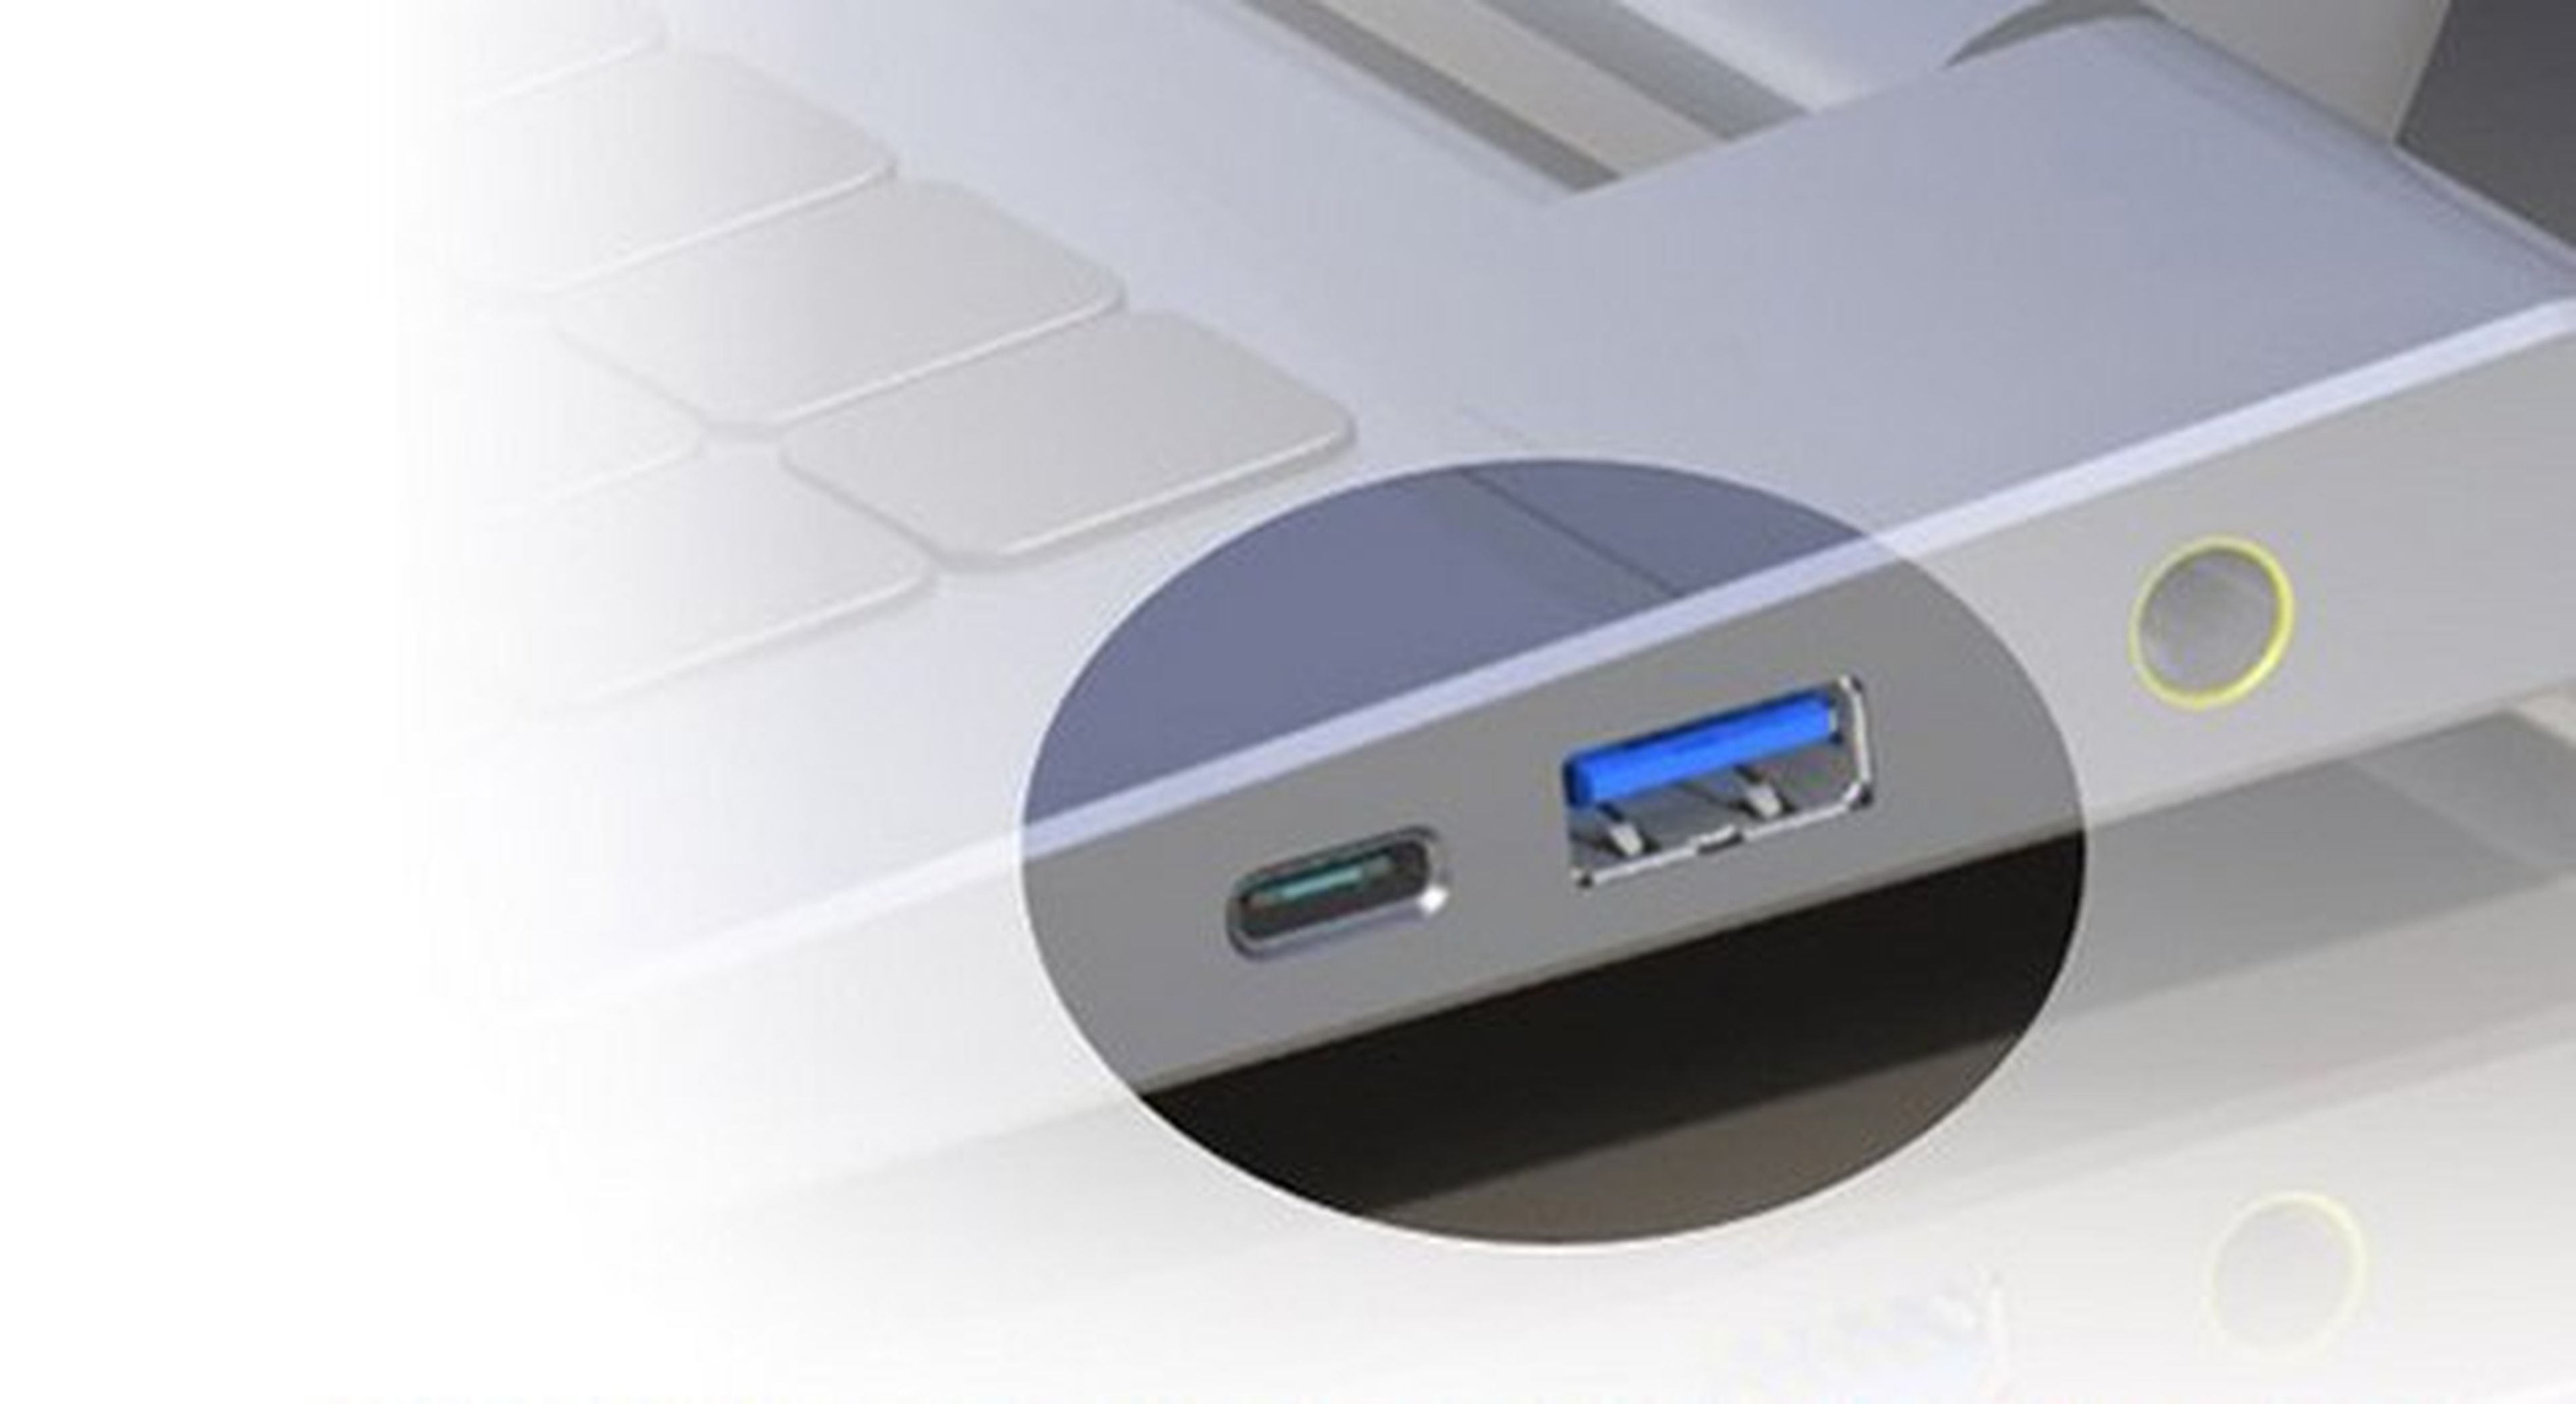 USB 3.1 reversible